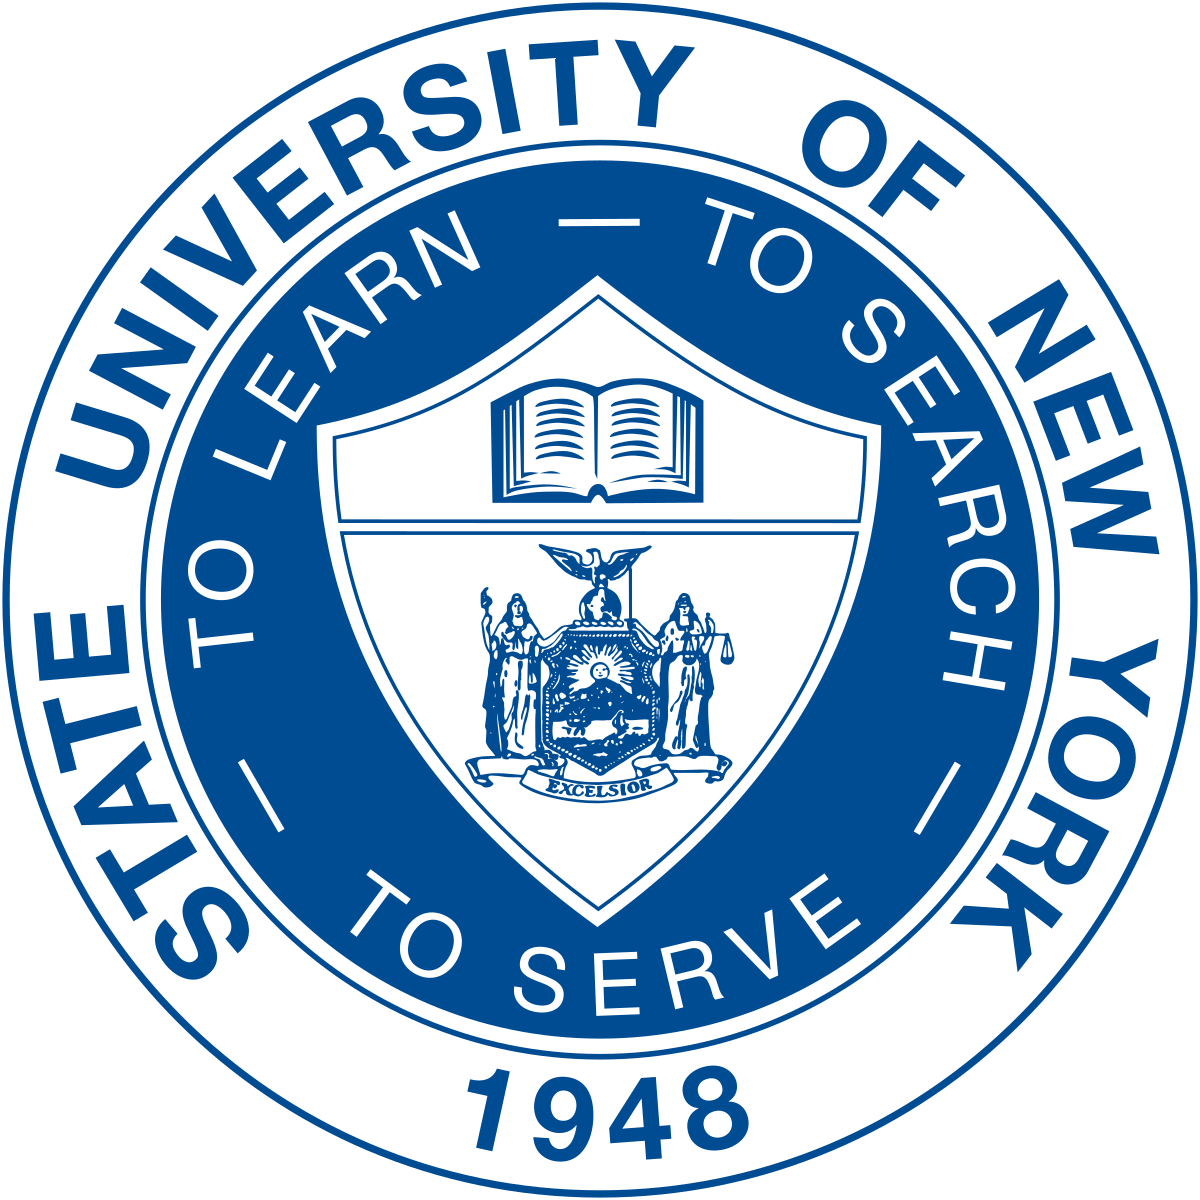 State University of New York Seal.